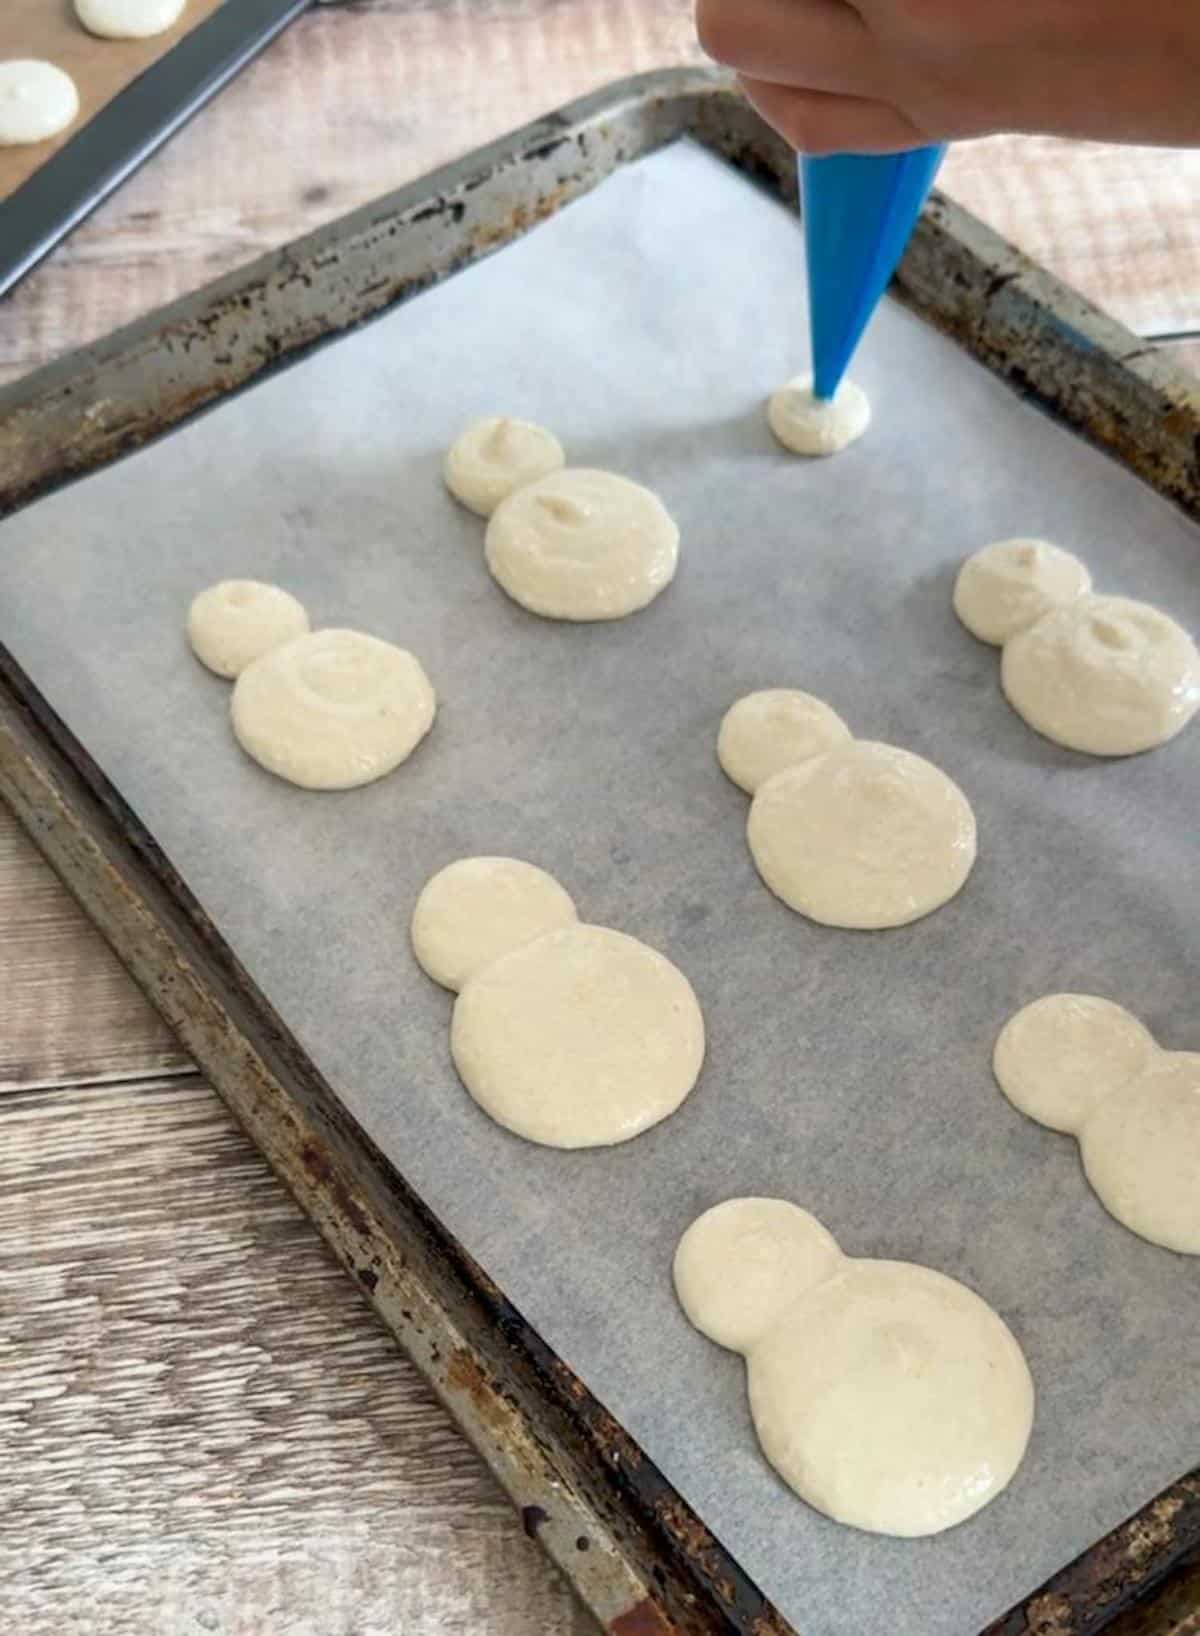 Piping snowman shaped macarons onto a baking tray.